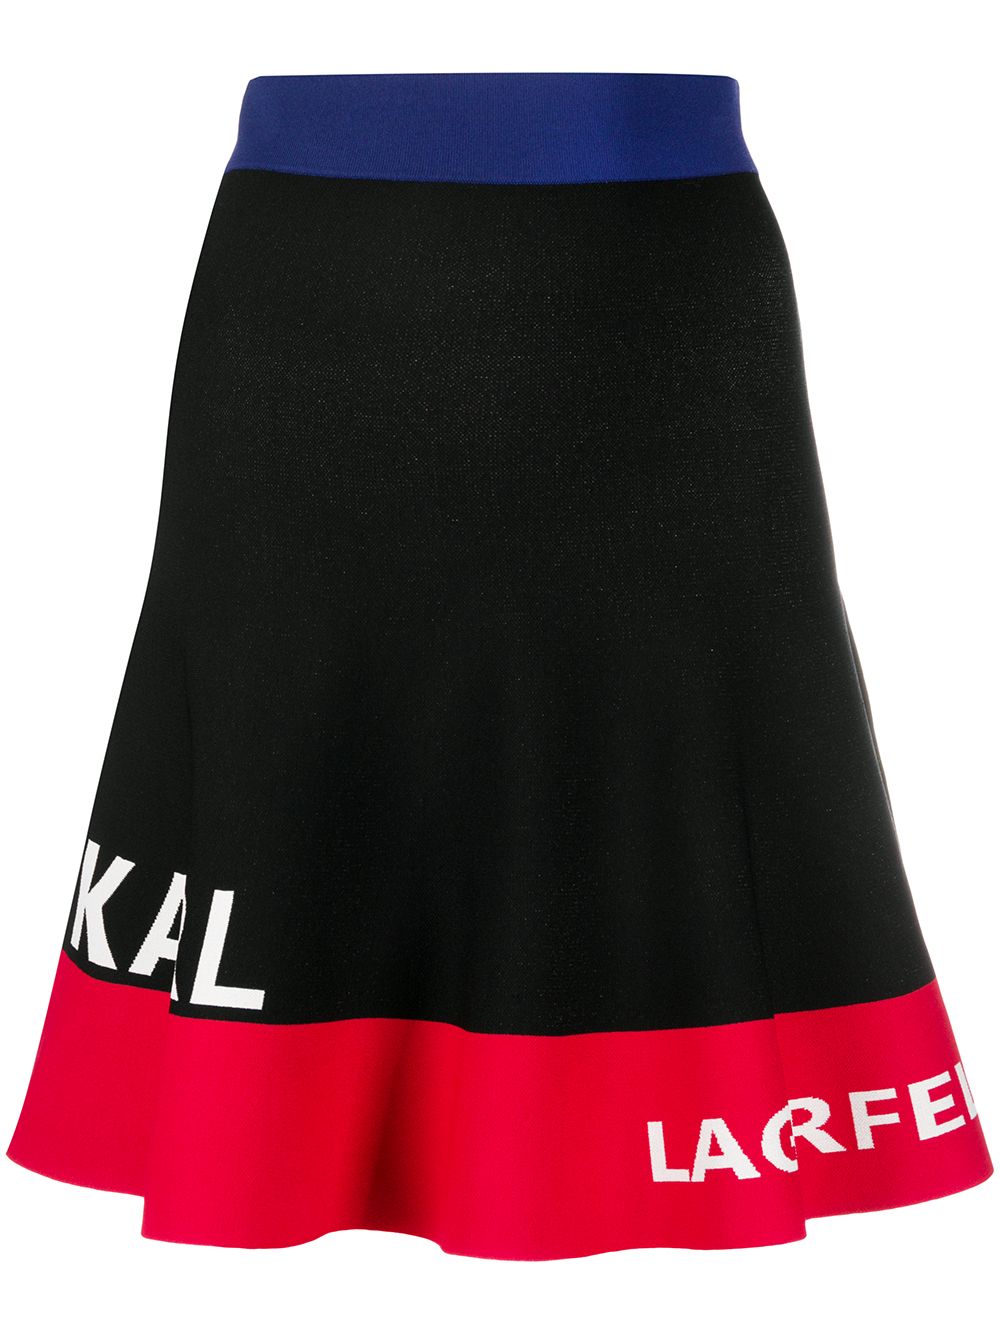 фото Karl lagerfeld юбка в стиле колор-блок с логотипом